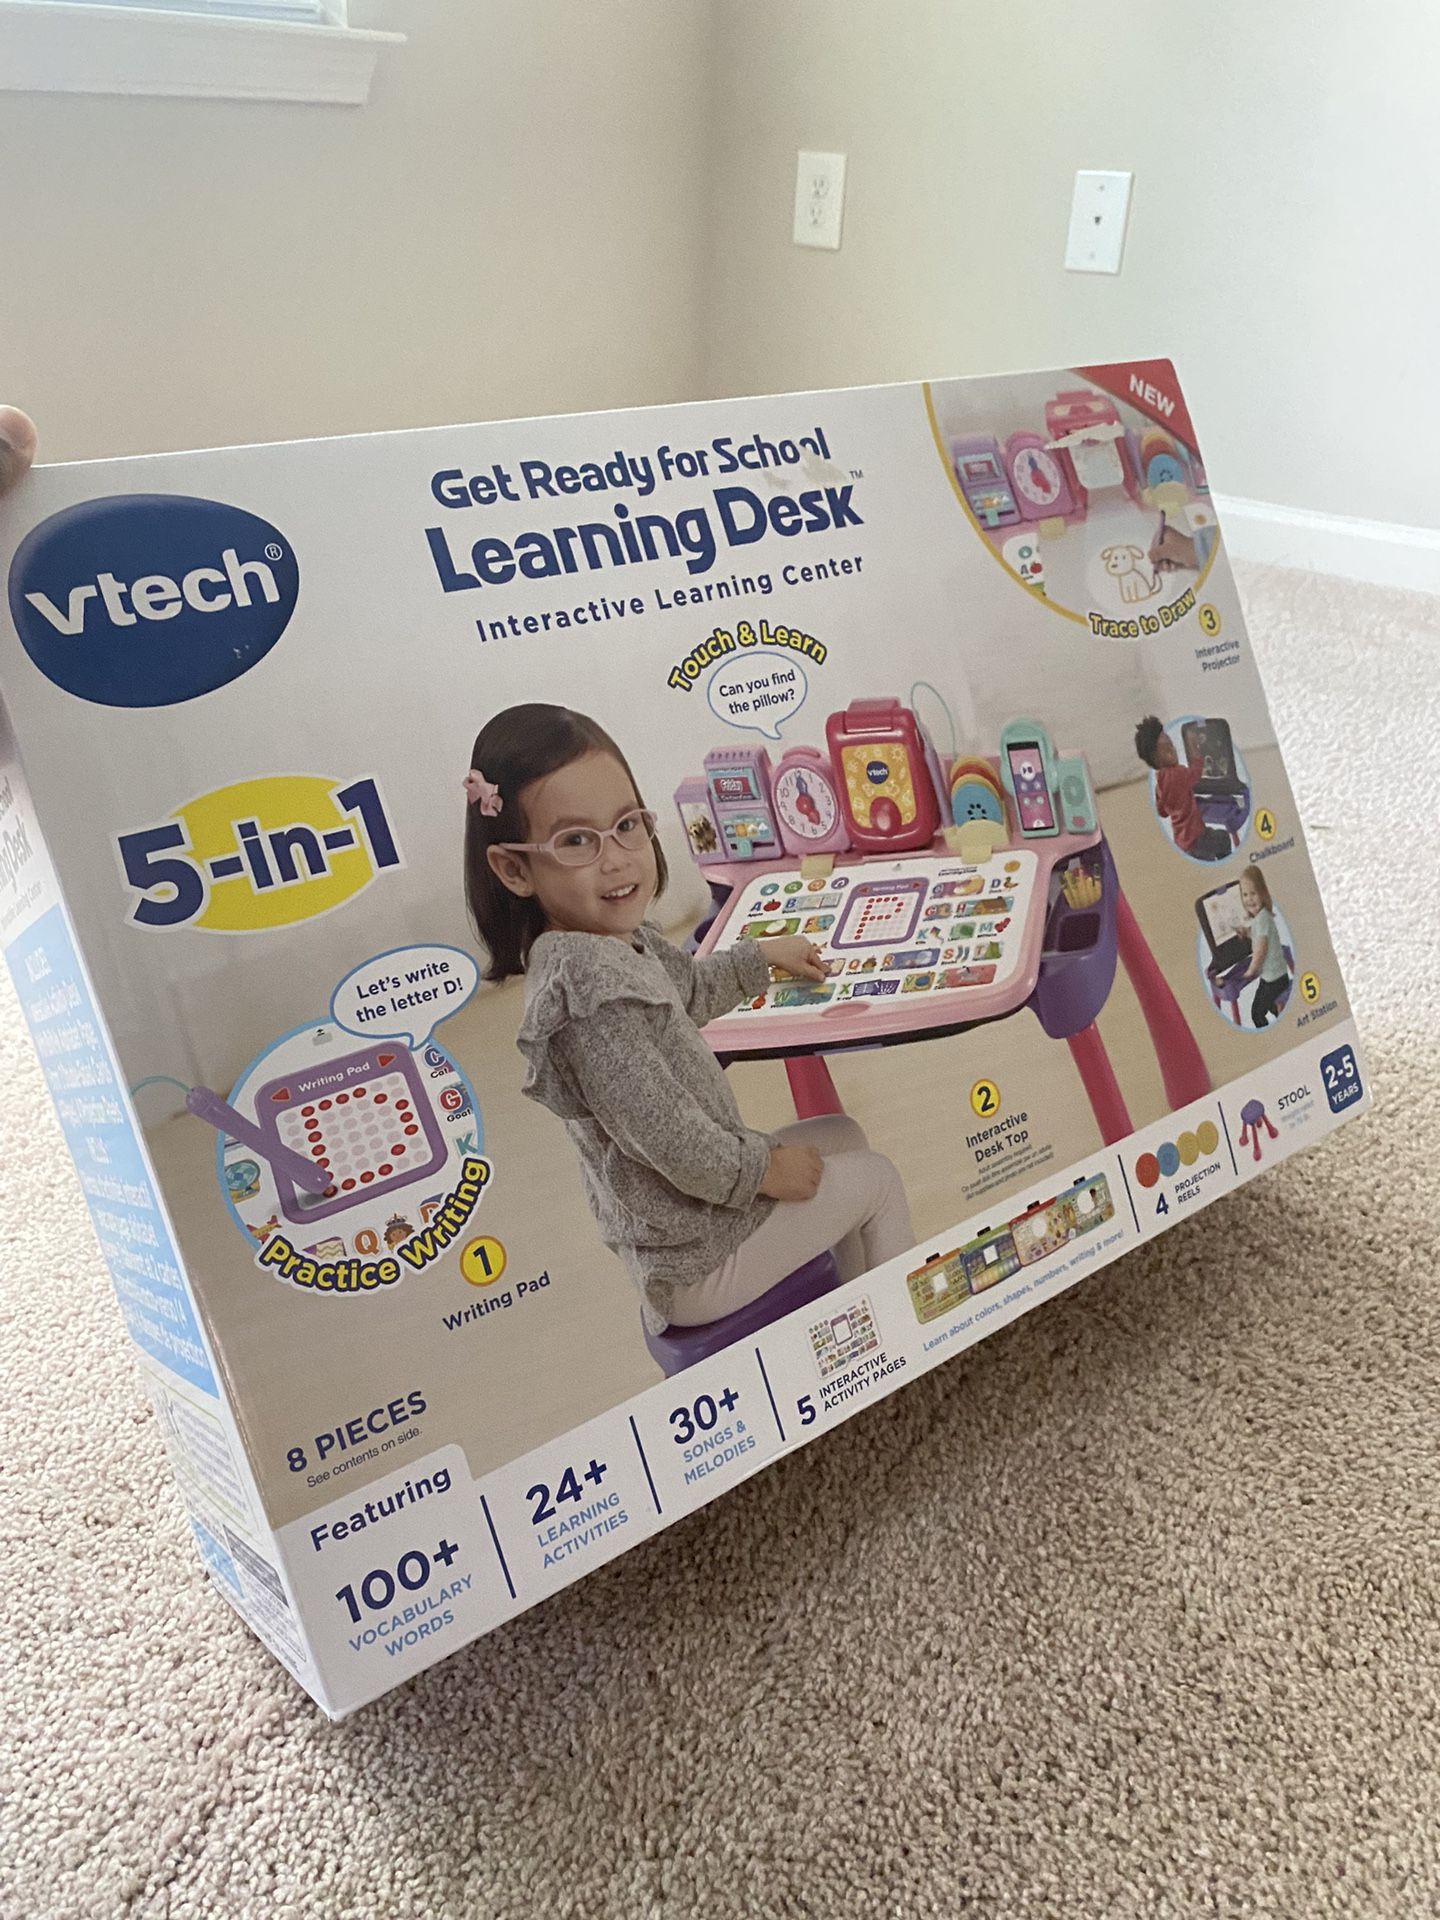 VTech - Get Ready for School Learning Desk 👧